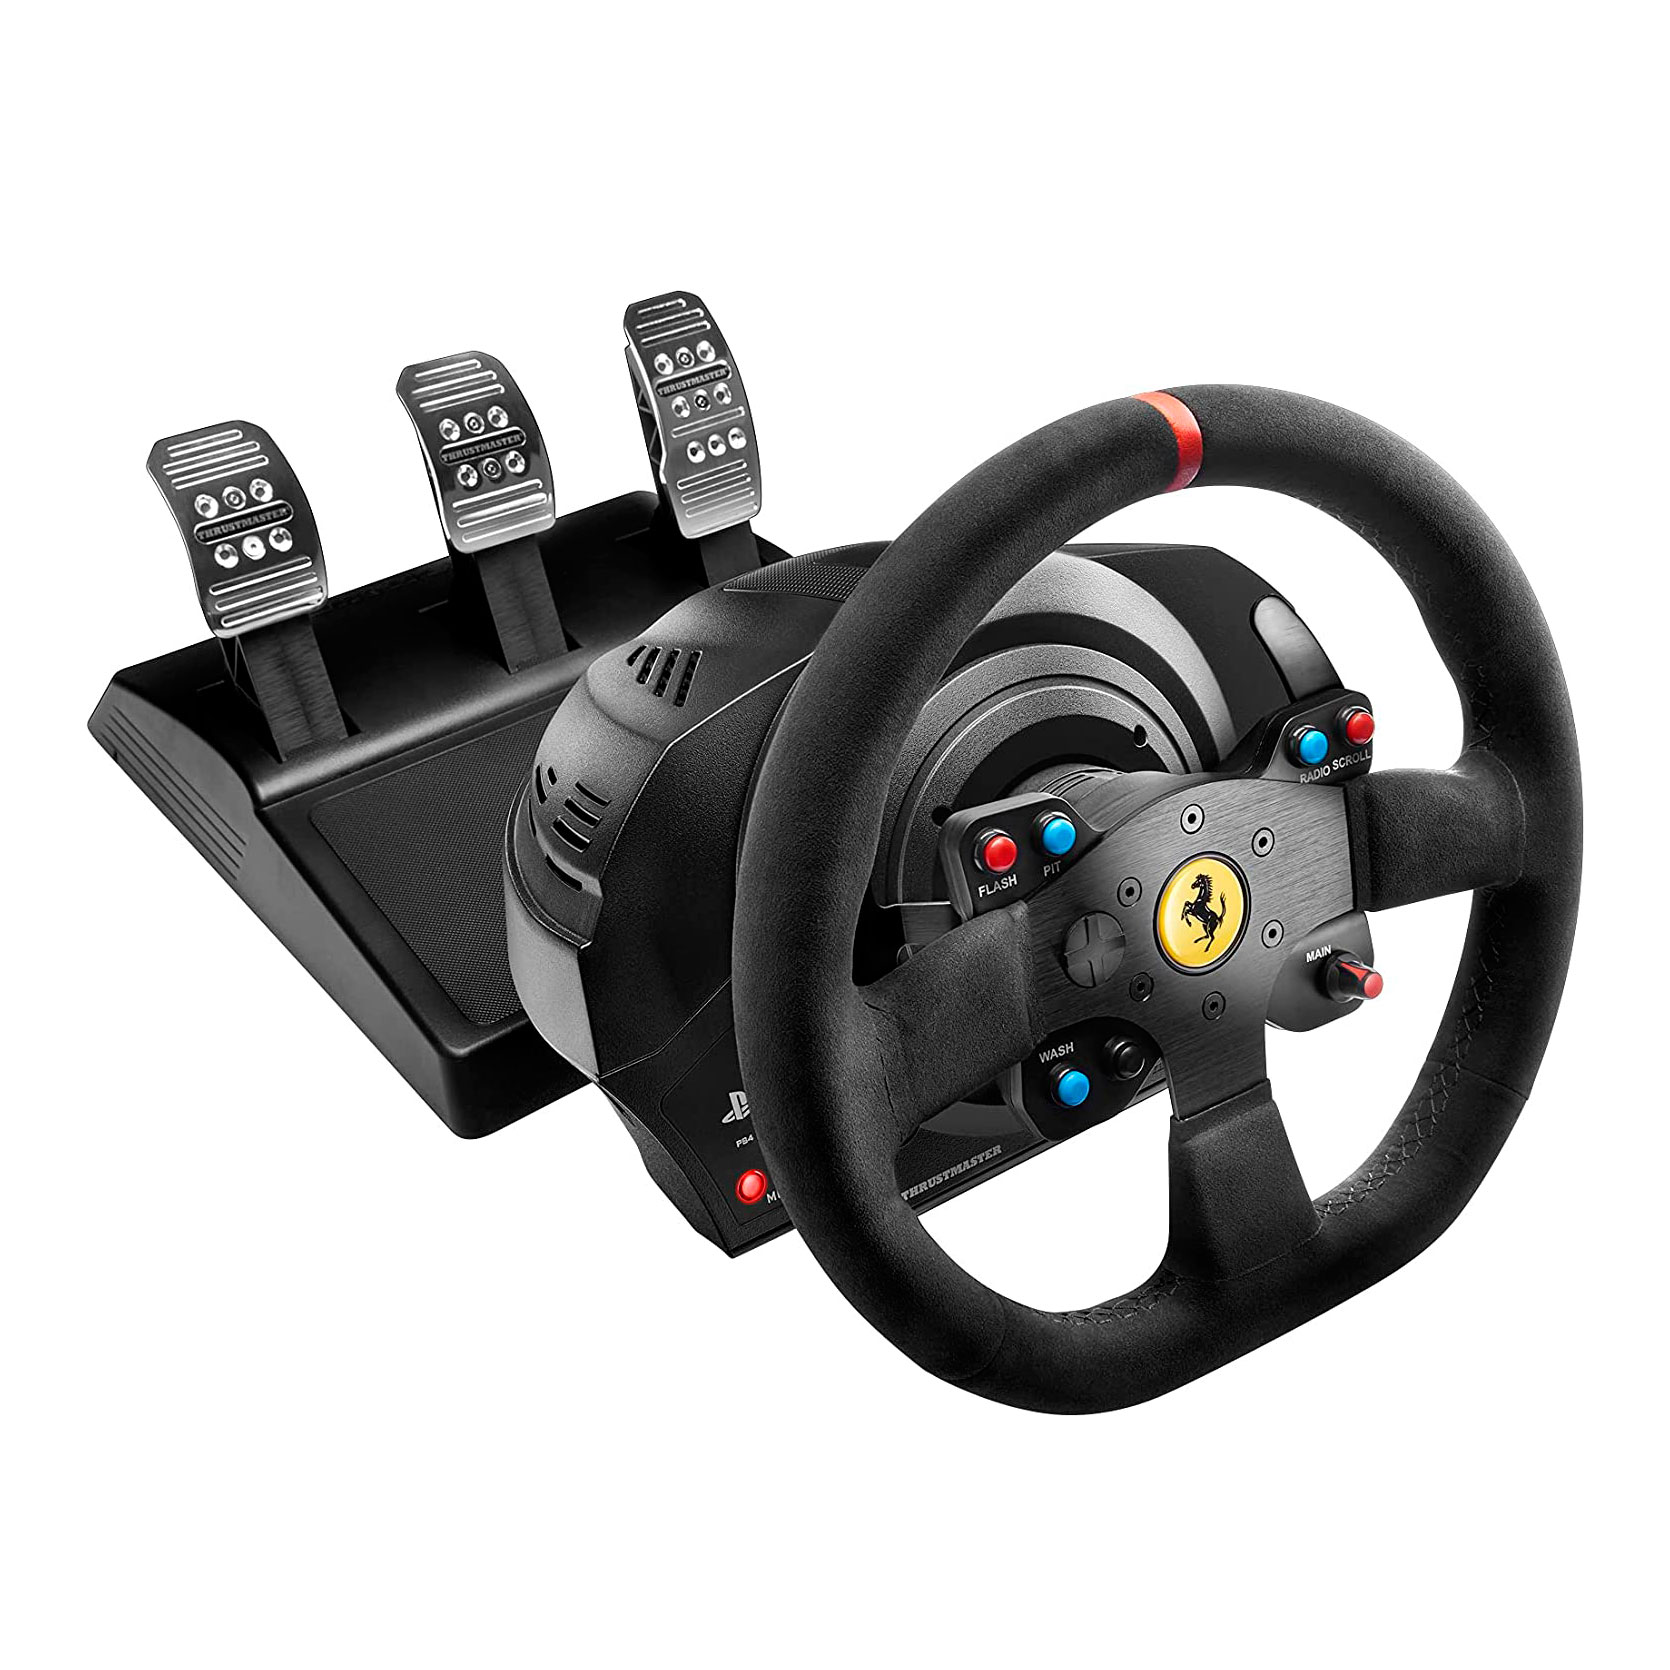 Руль Thrustmaster T300 Ferrari Integral Racing, черный logitech g29 racing wheel ps3 ps4 and pc